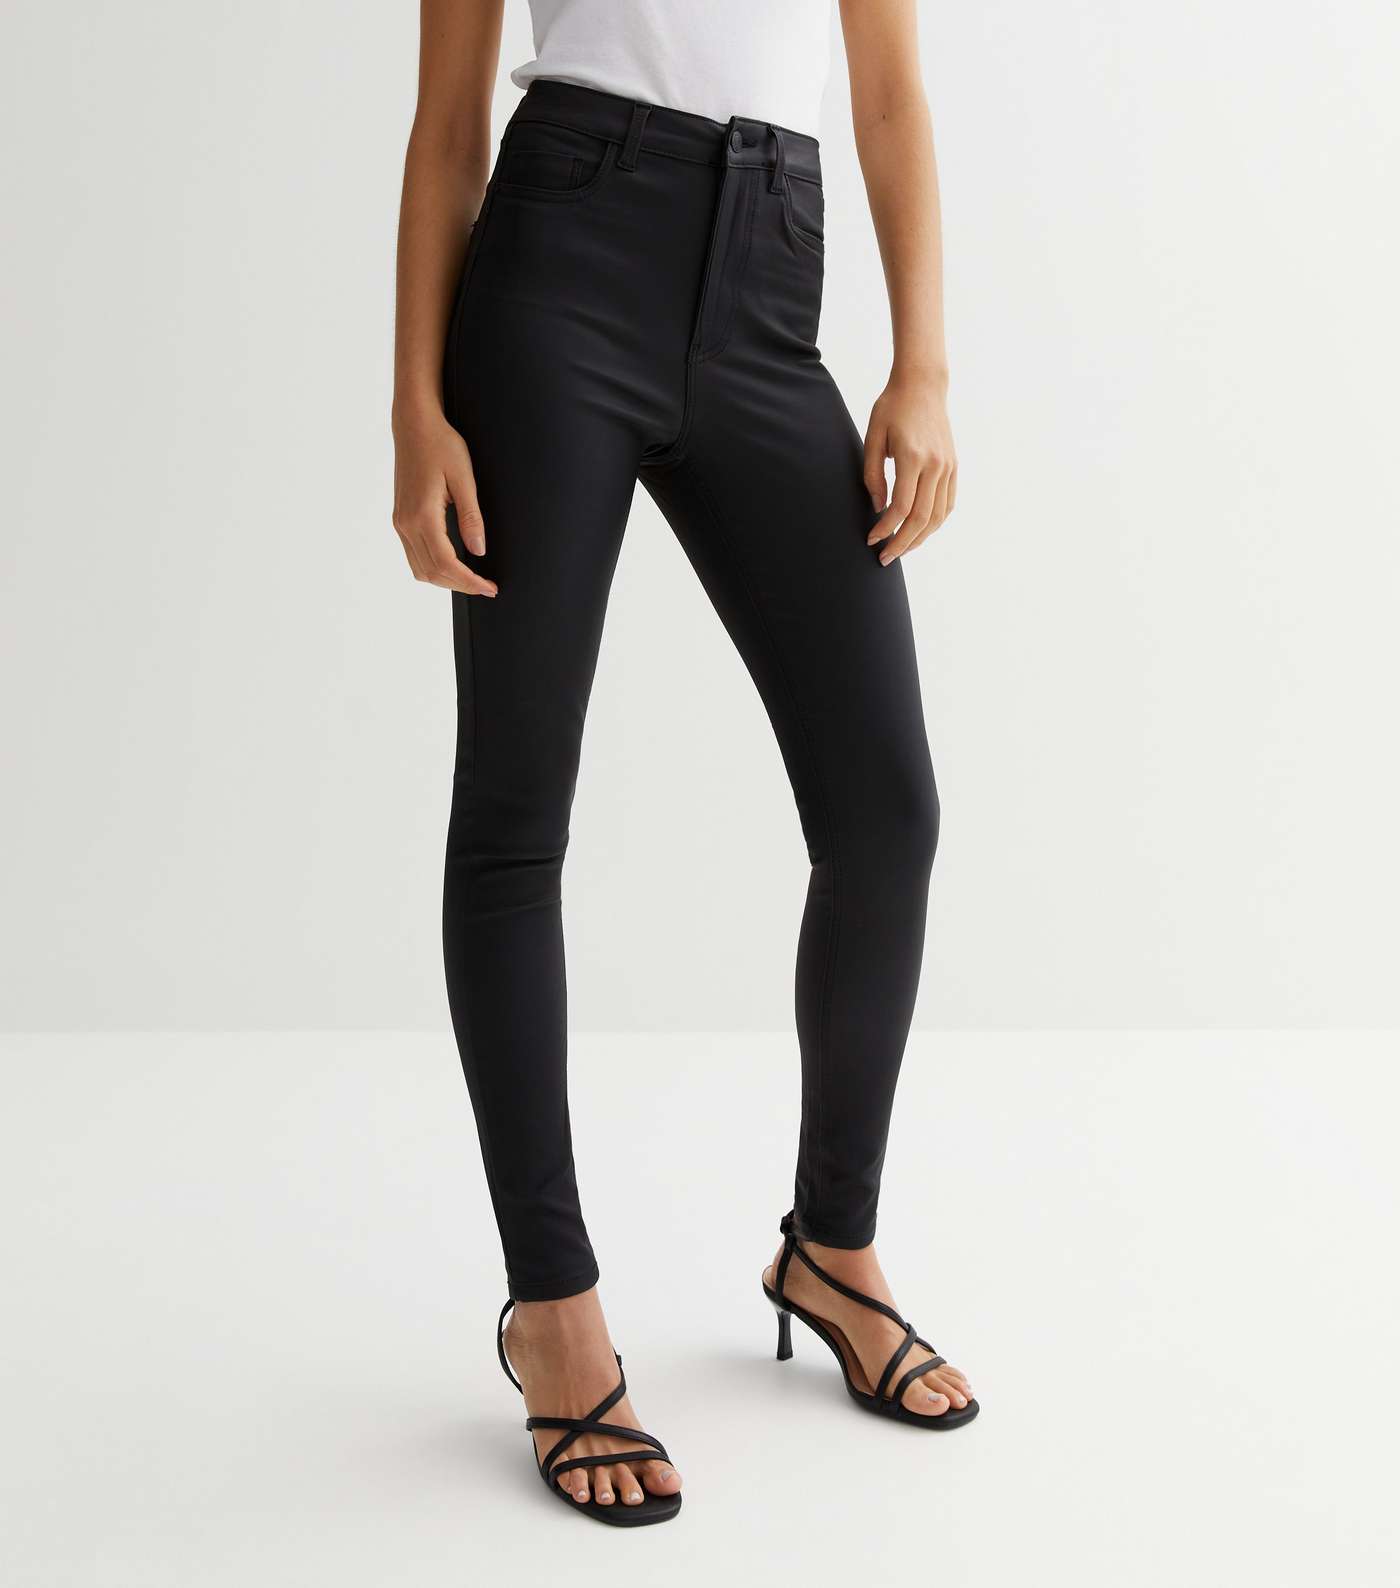 Black Coated Leather-Look Lift & Shape Jenna Skinny Jeans Image 2